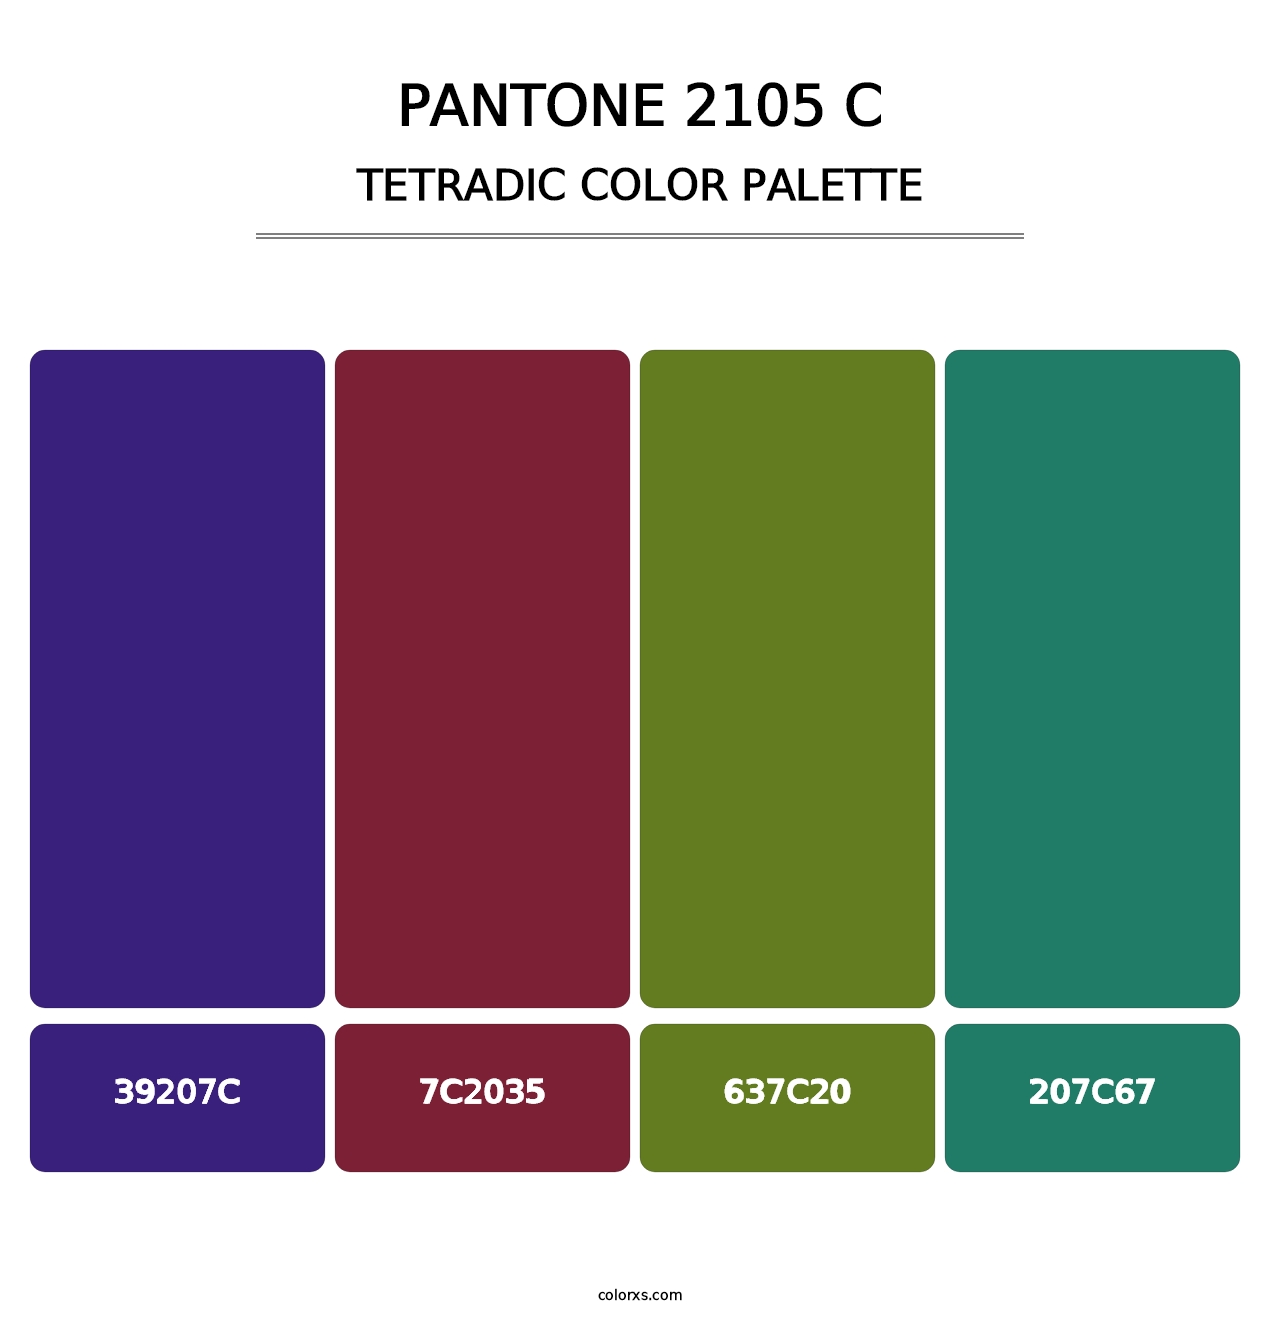 PANTONE 2105 C - Tetradic Color Palette